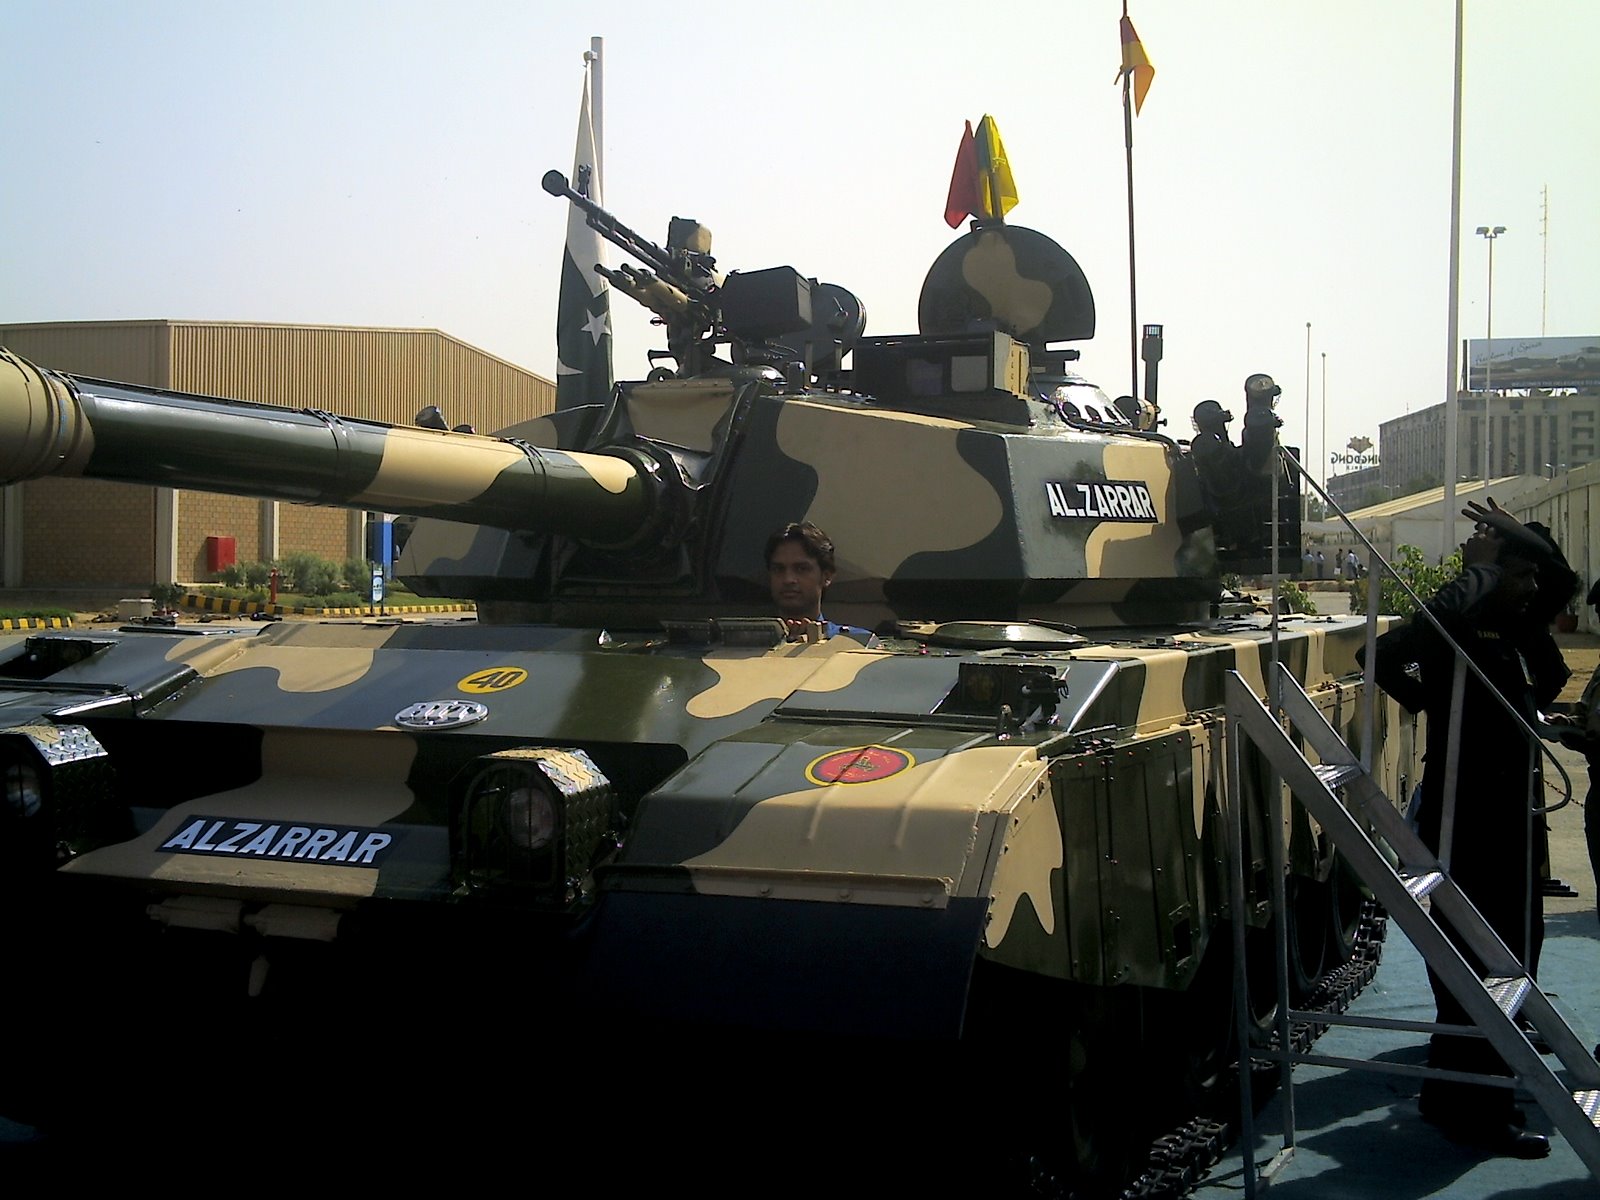 Al Zarrar Tank